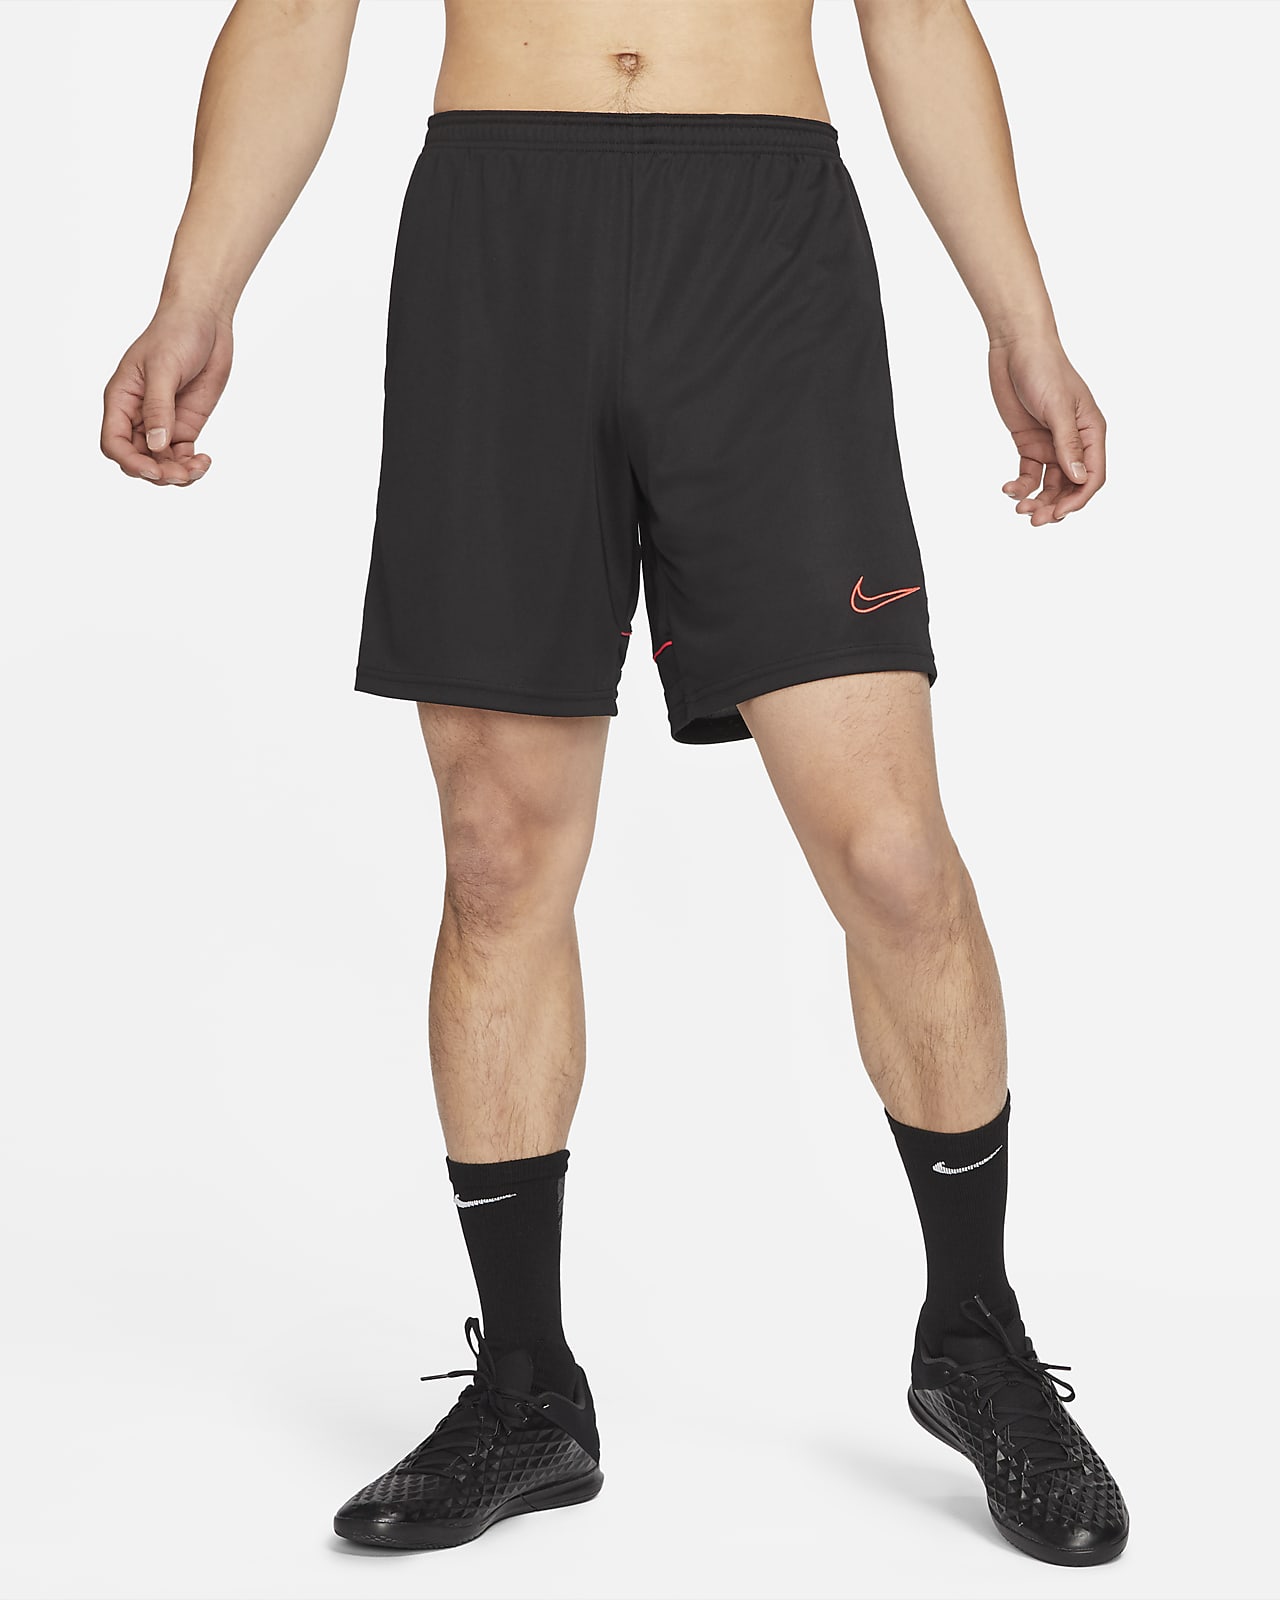 academy nike shorts men's